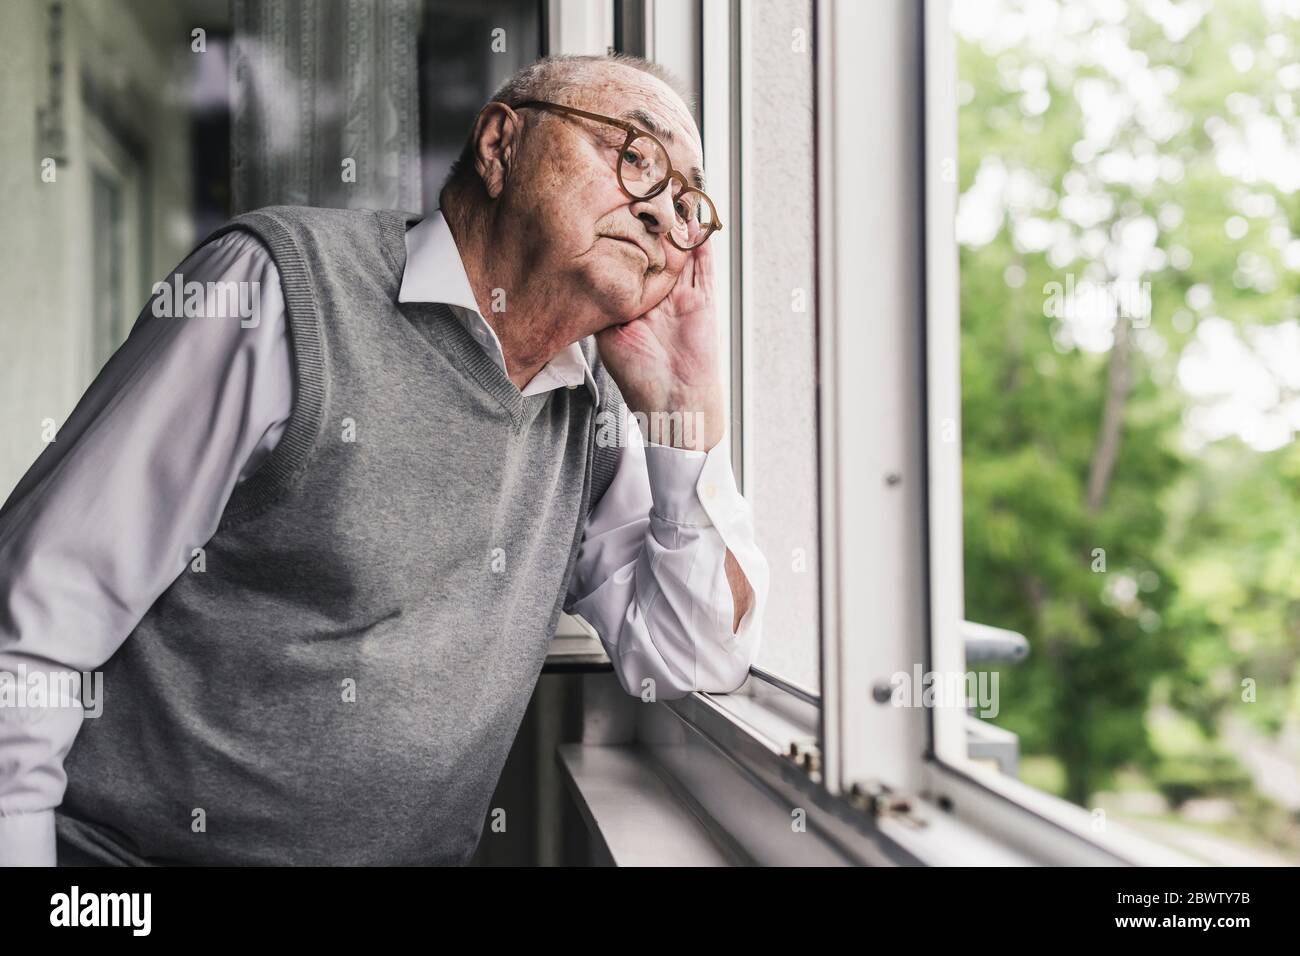 portrait-of-sad-senior-man-looking-out-of-window-2BWTY7B.jpg